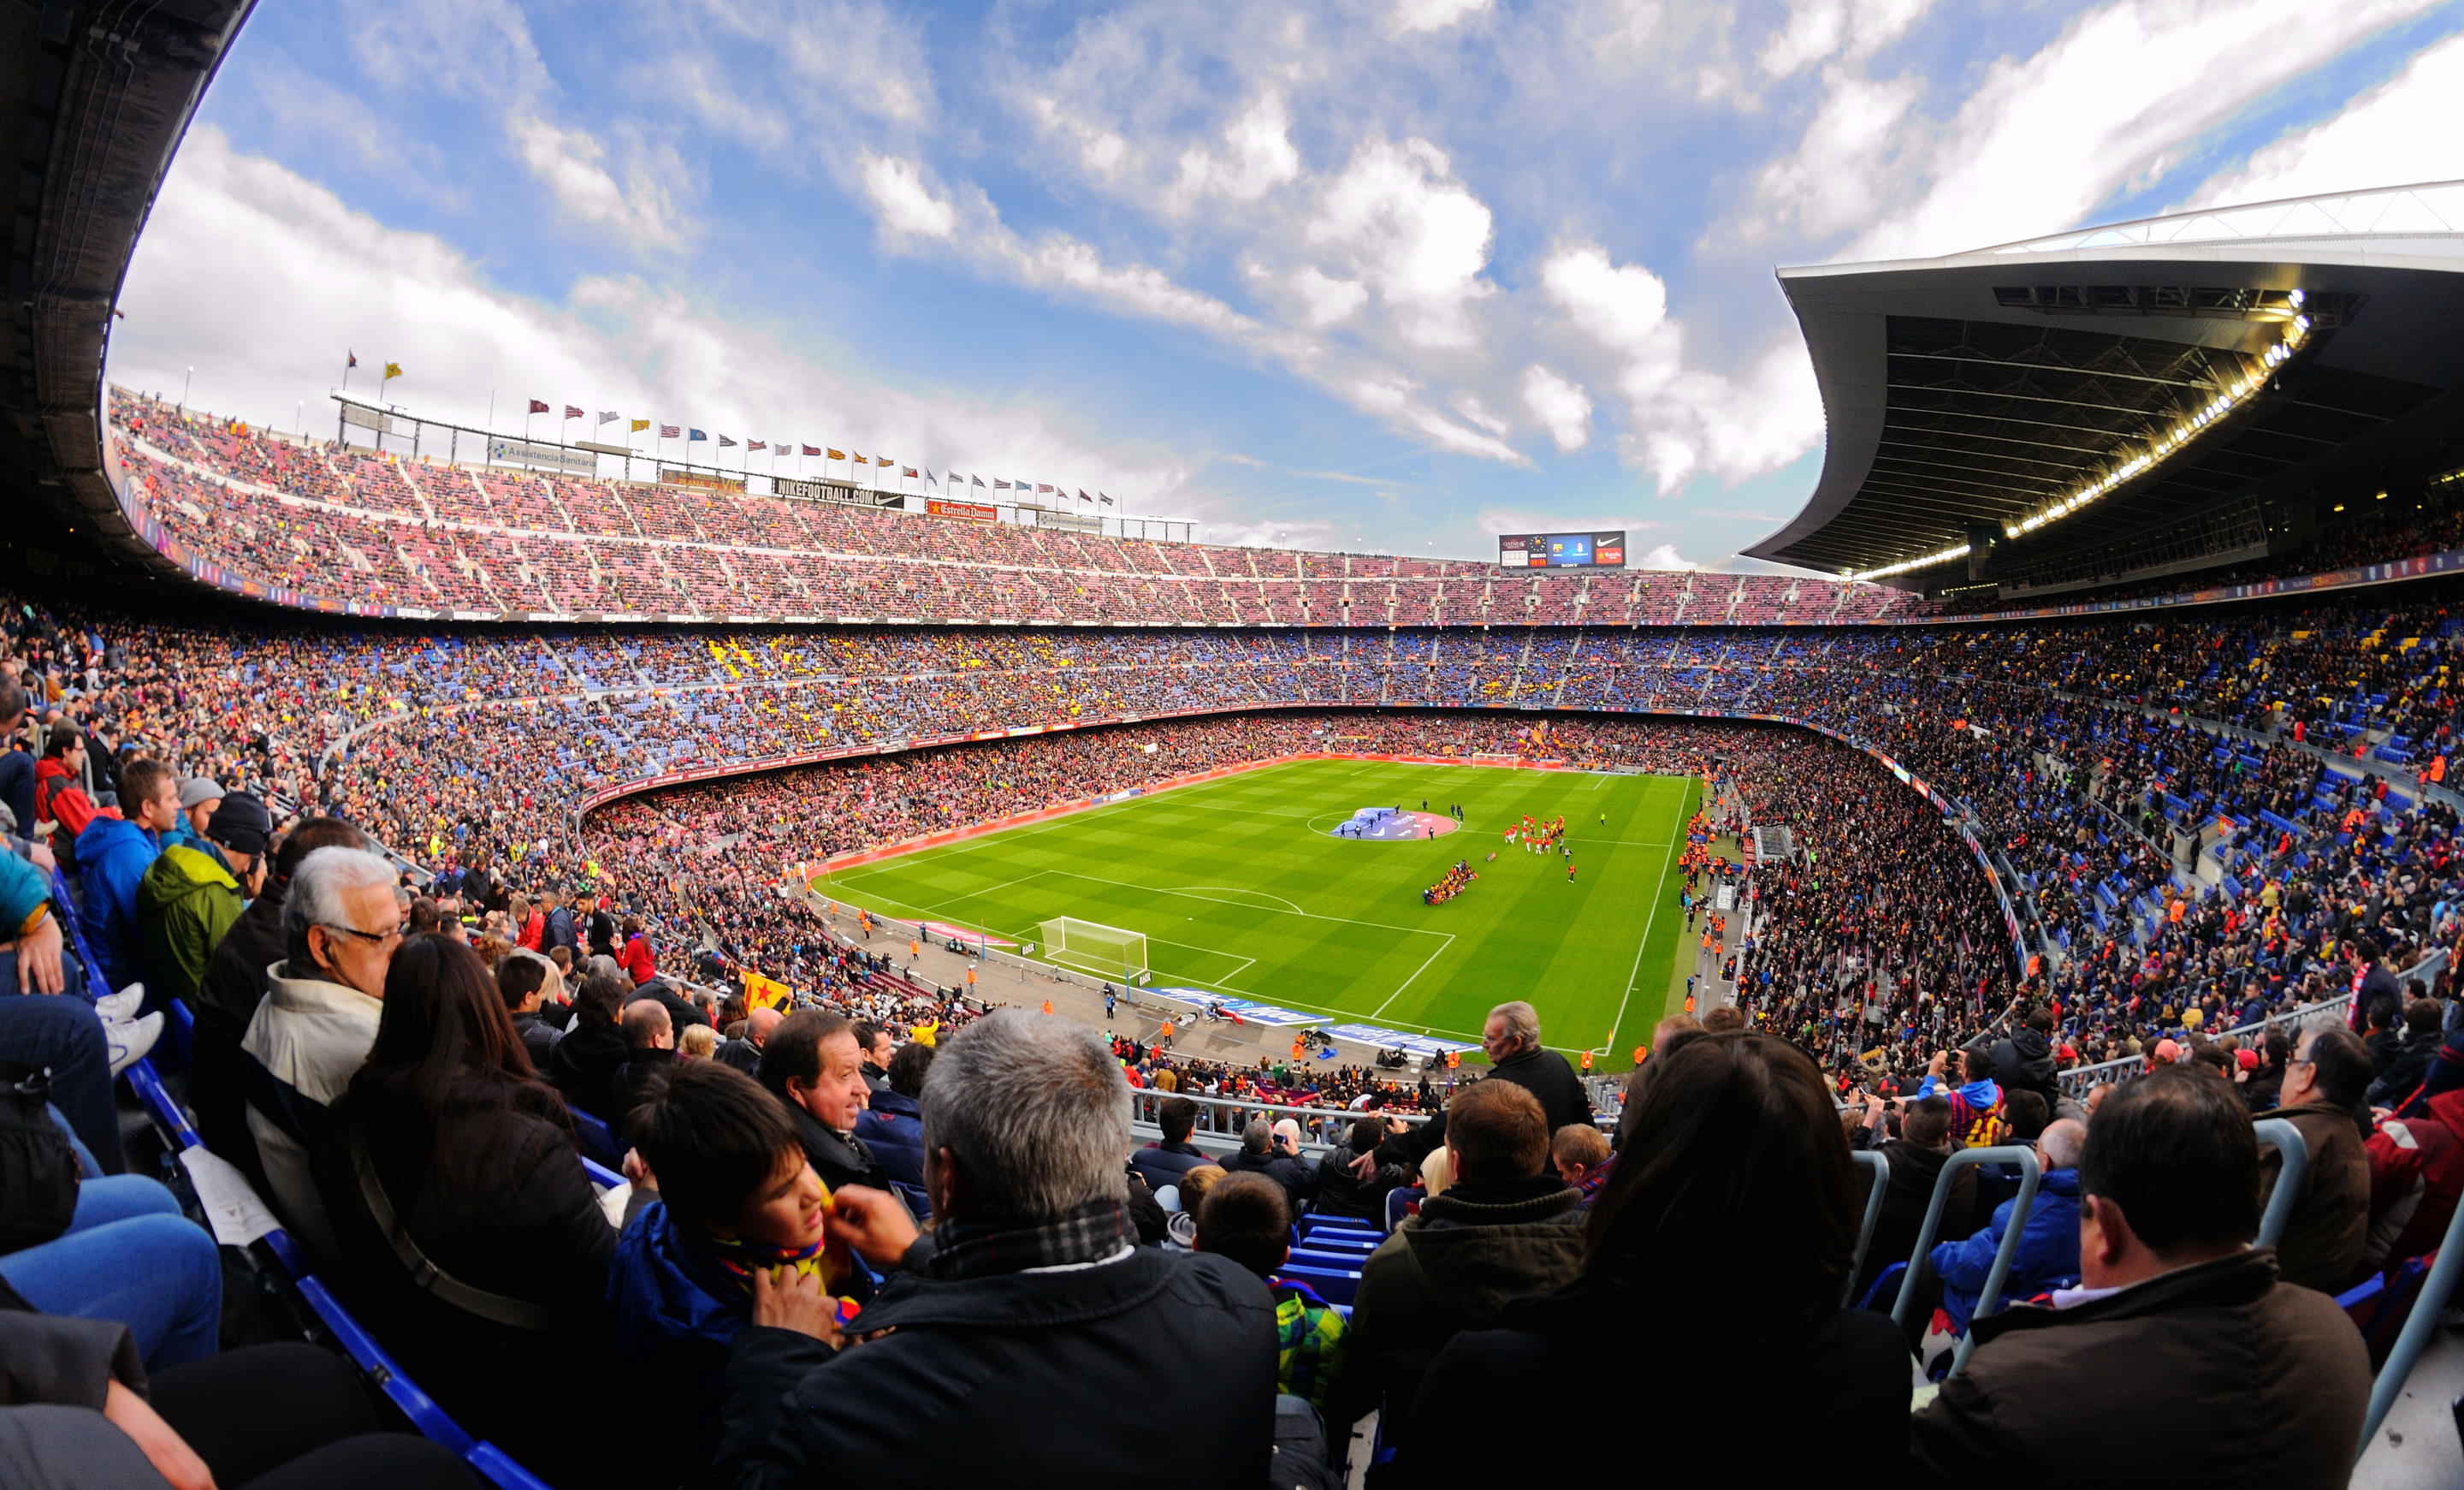 Camp Nou Overview